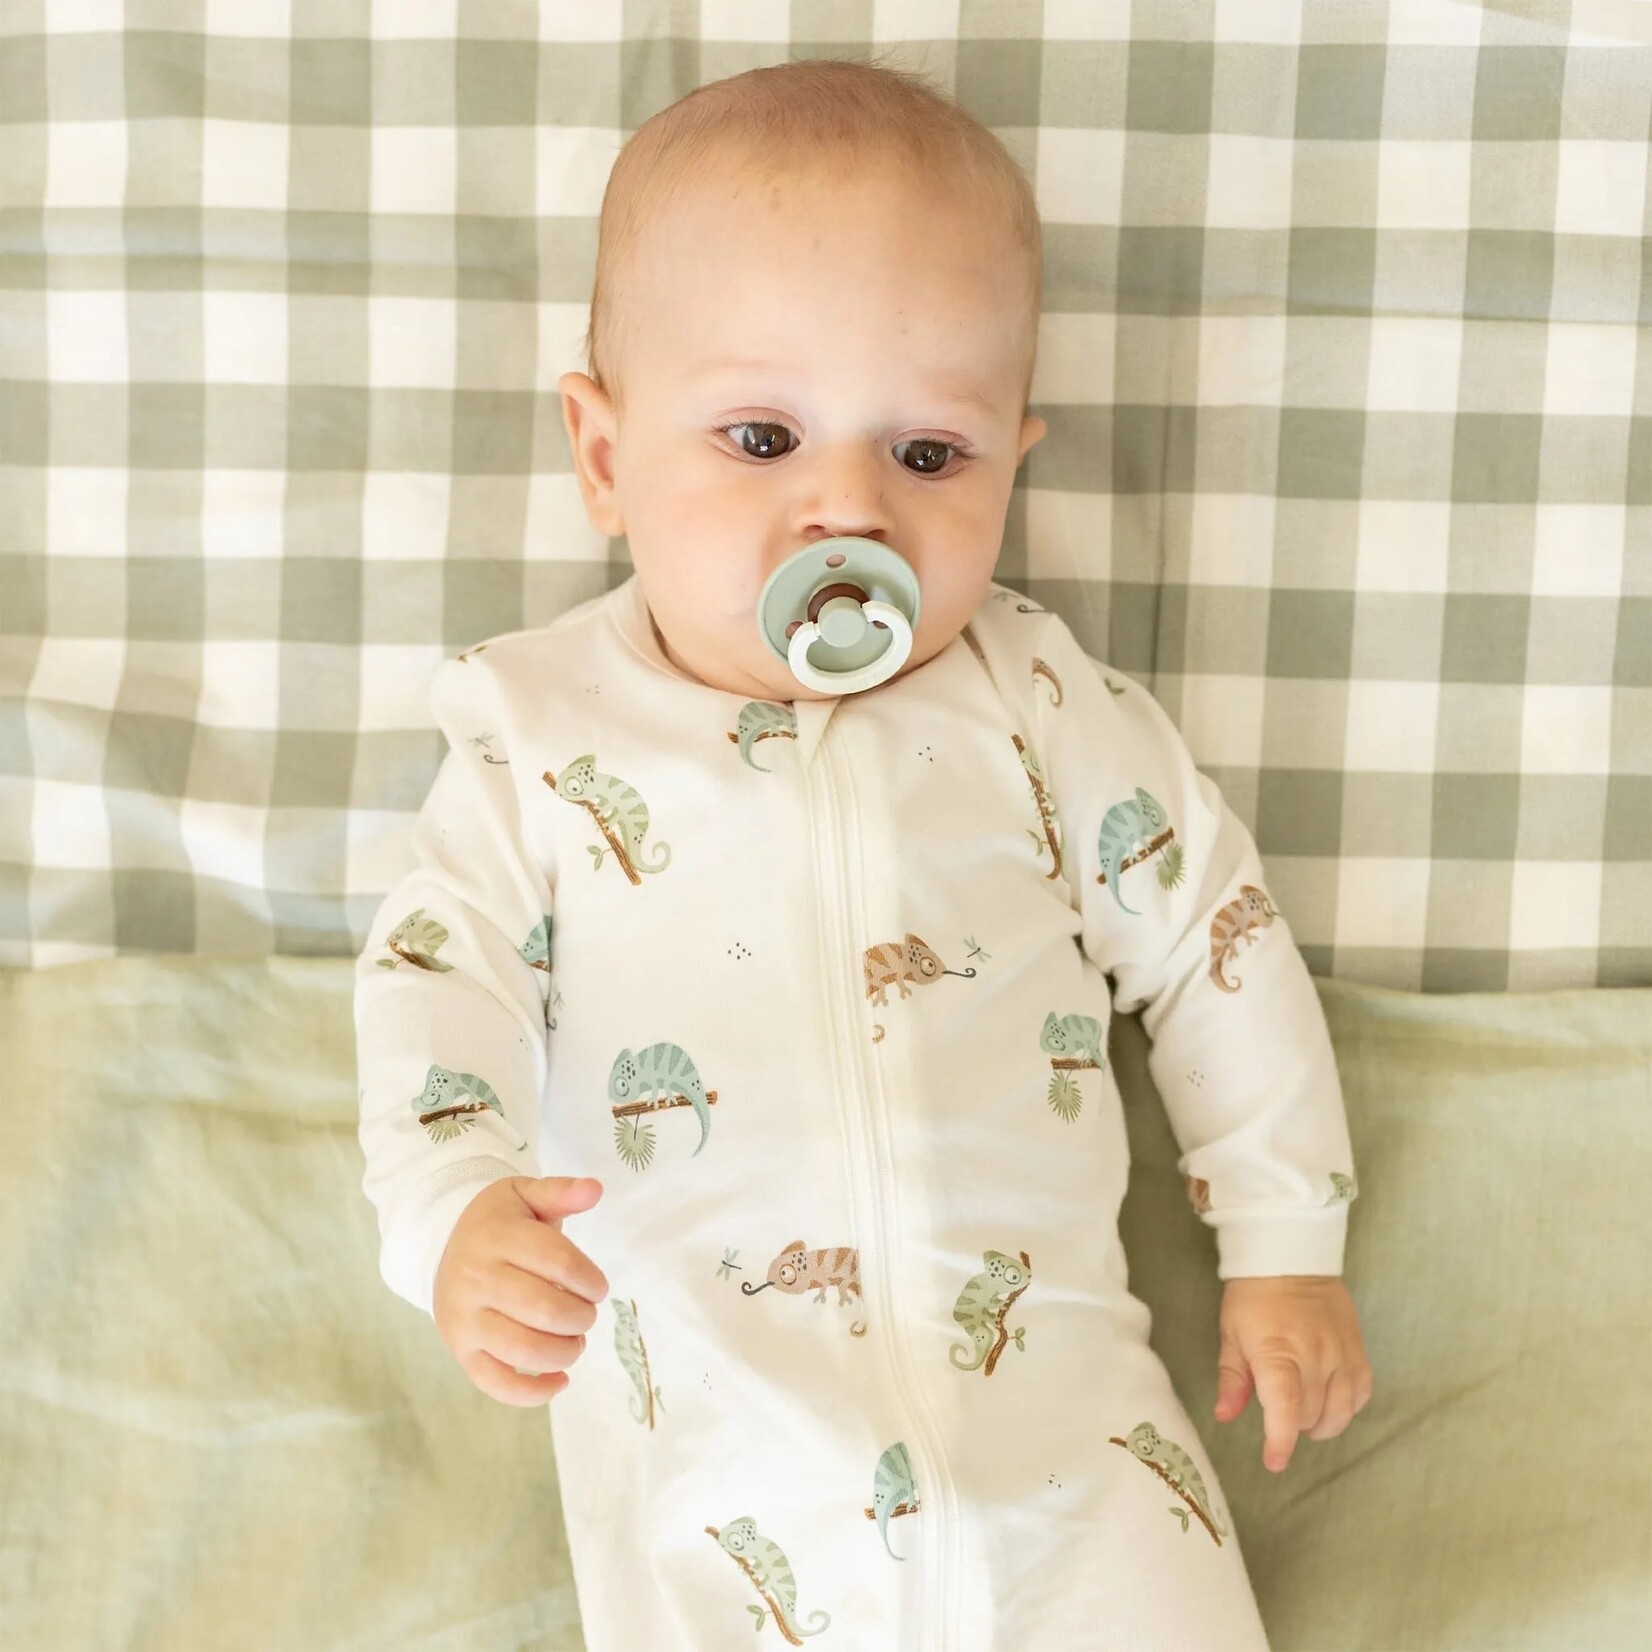 Petit Lem PETIT LEM - Off-white baby pajamas with 'Chameleon' print